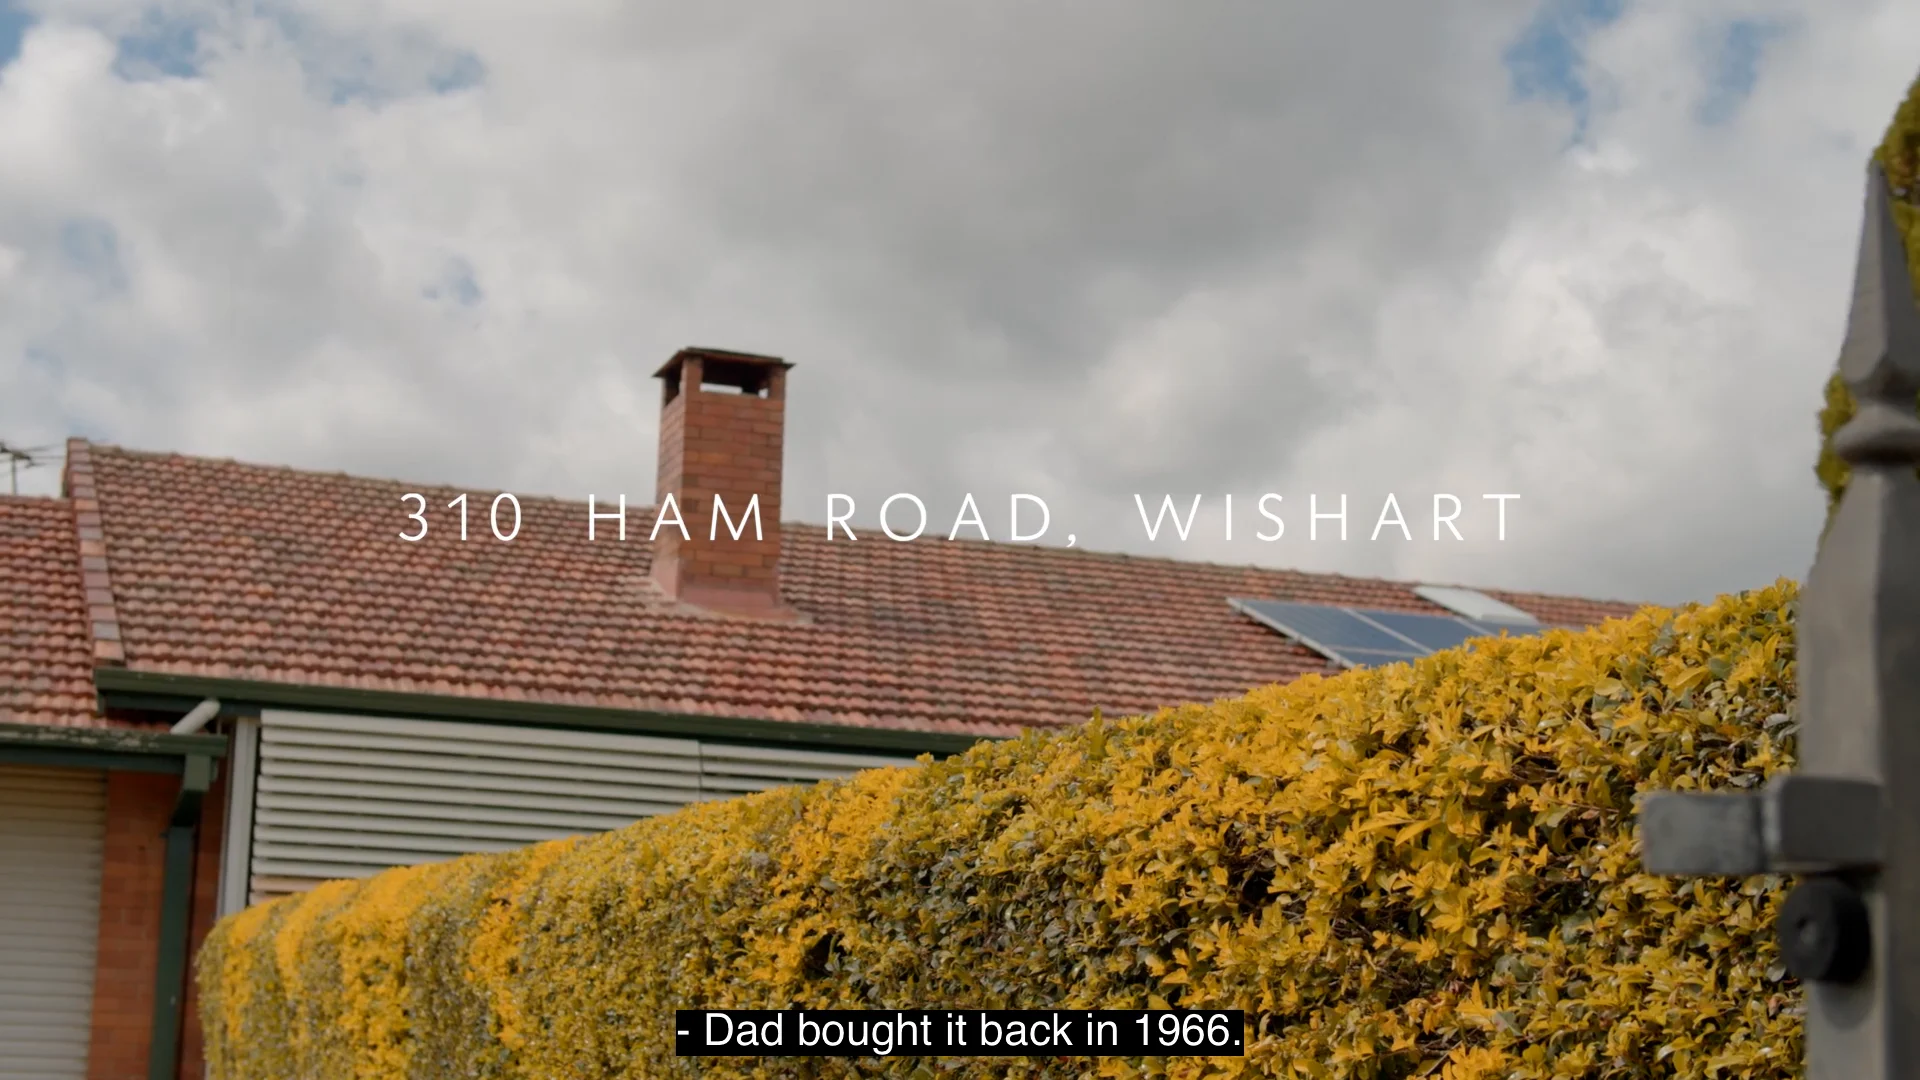 310 Ham Rd Wishart Seller Testimonial On Vimeo 0291